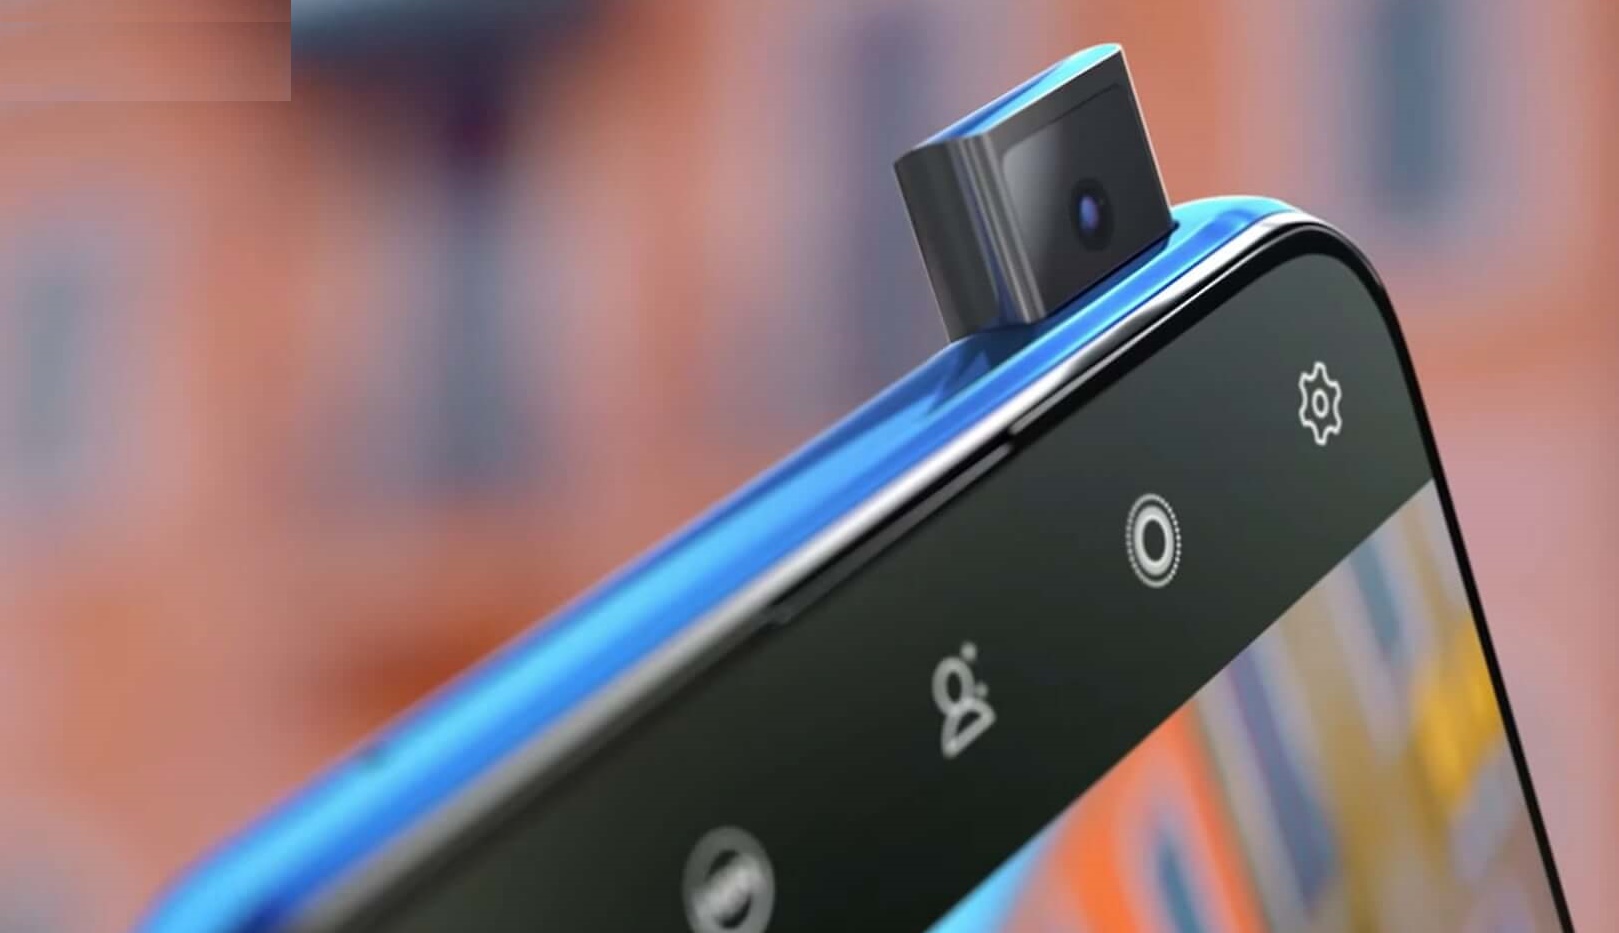 OnePlus 7 pop up camera